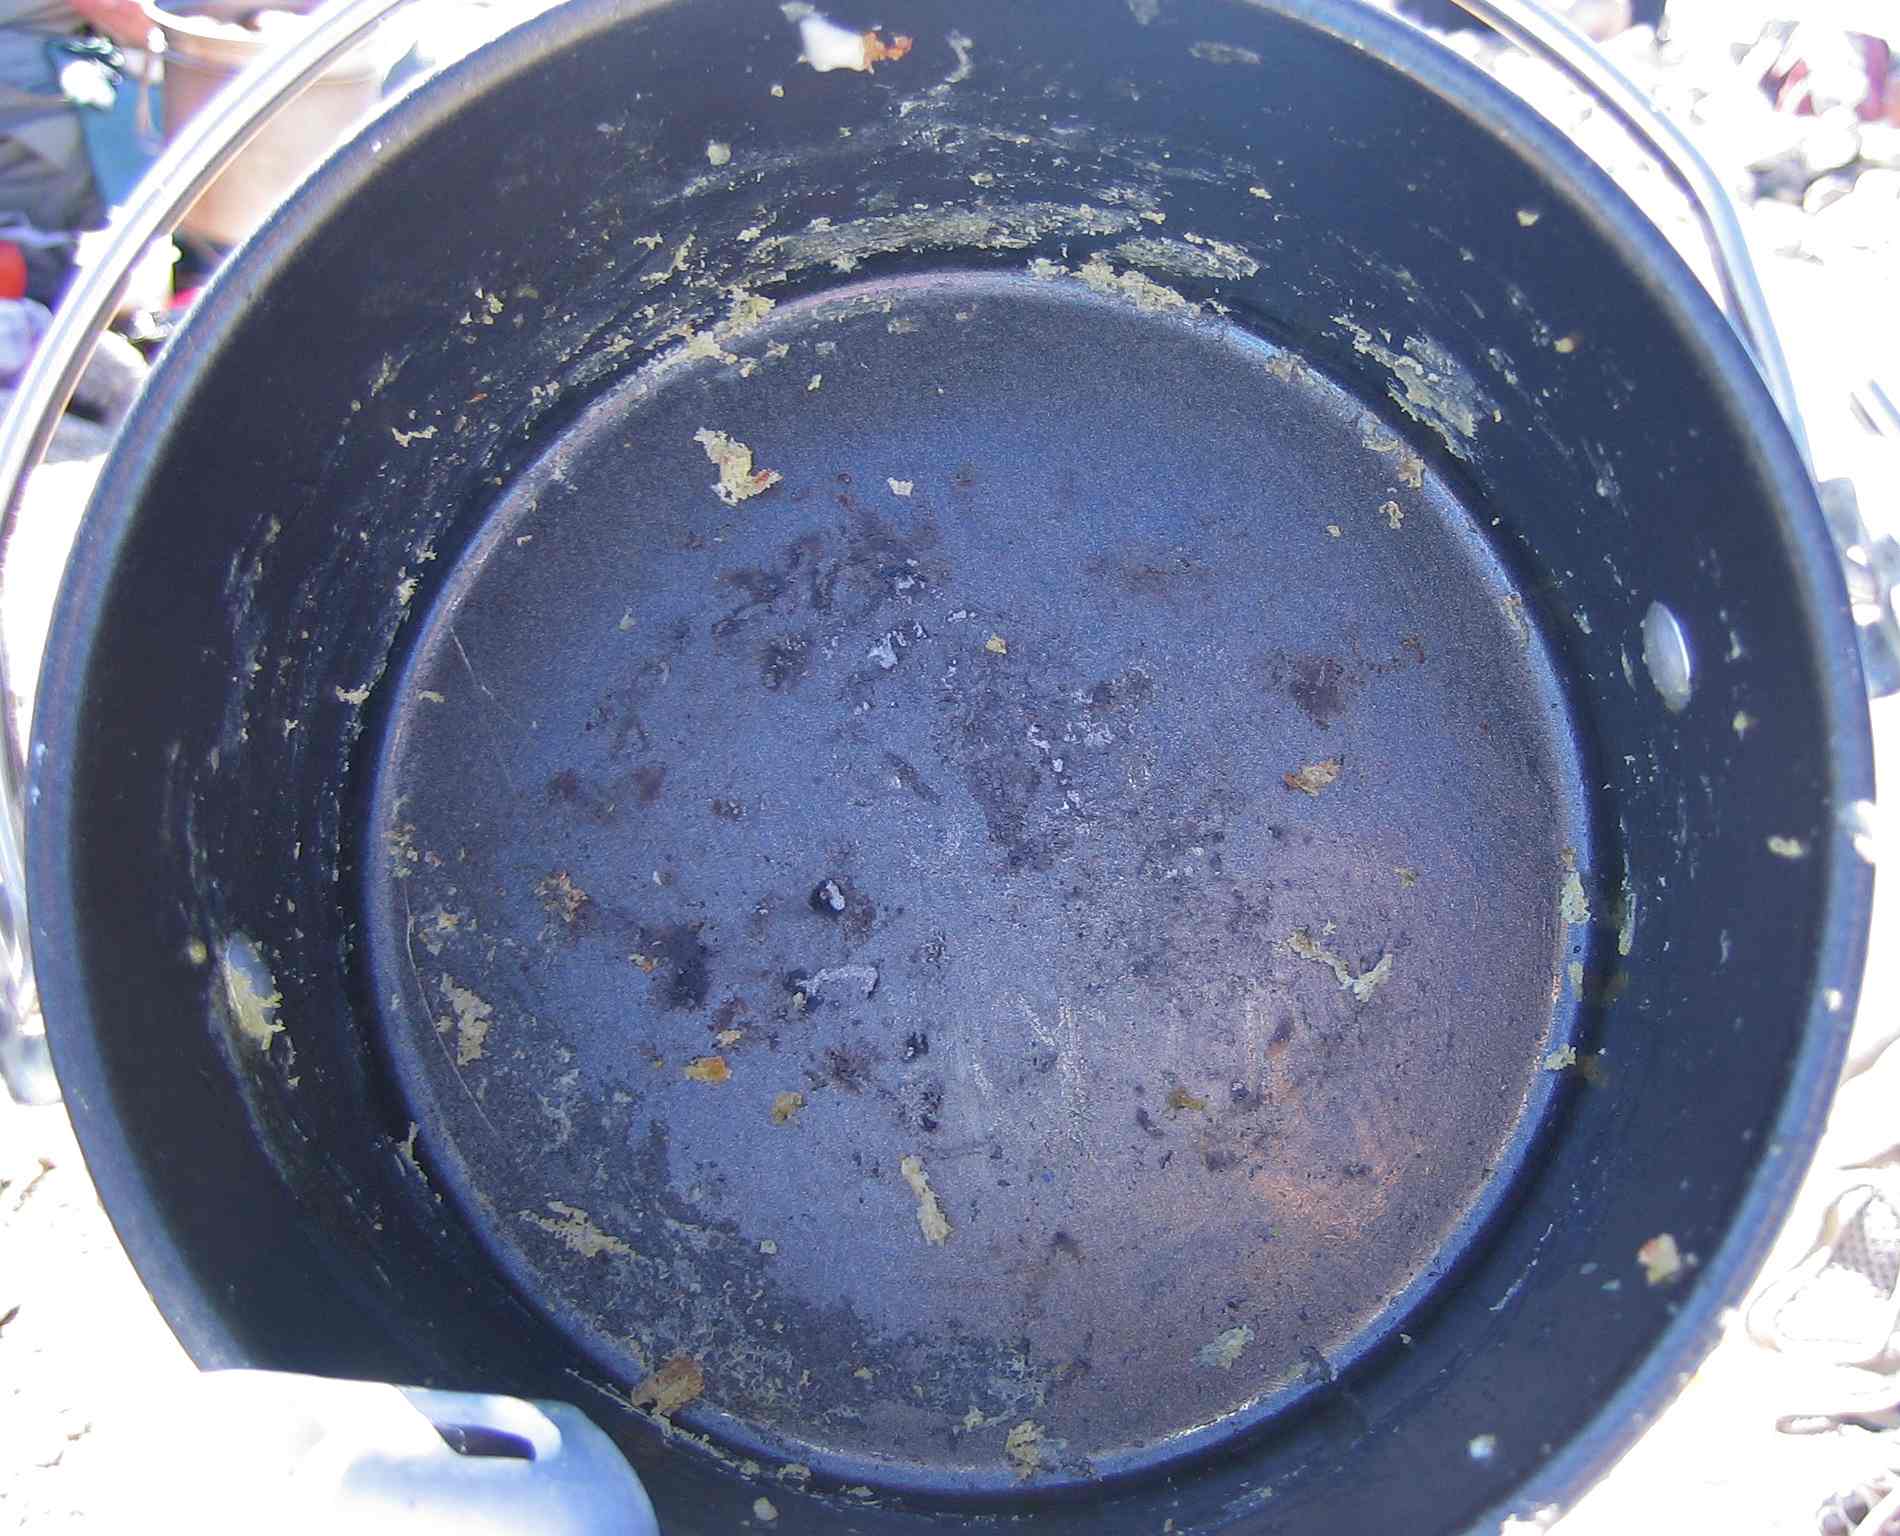 Egg pan before